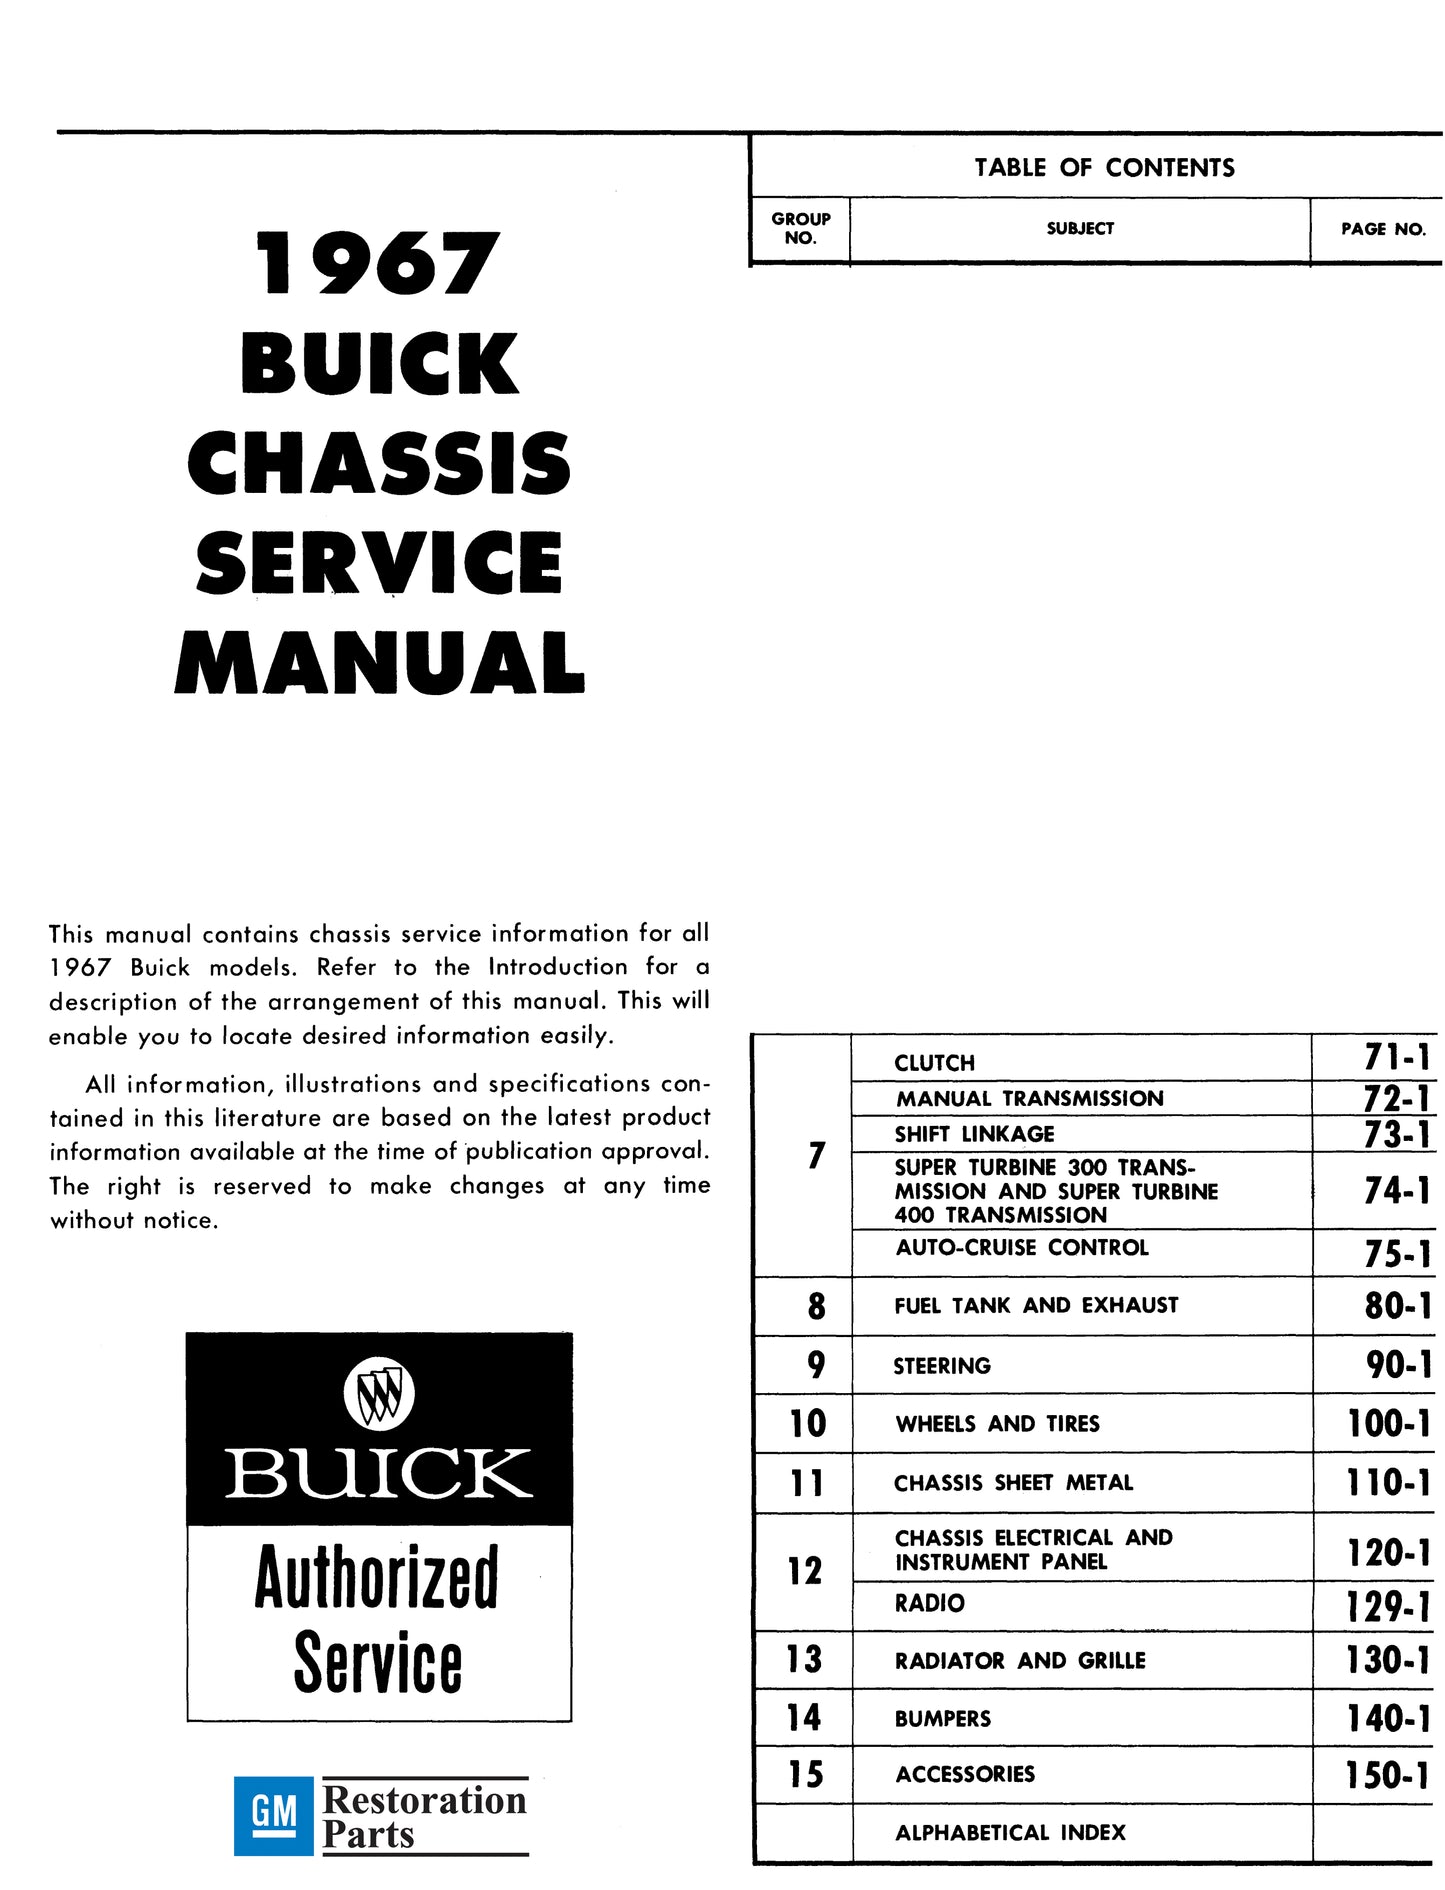 1967 Buick Repair Manual & Body Manual - All Models